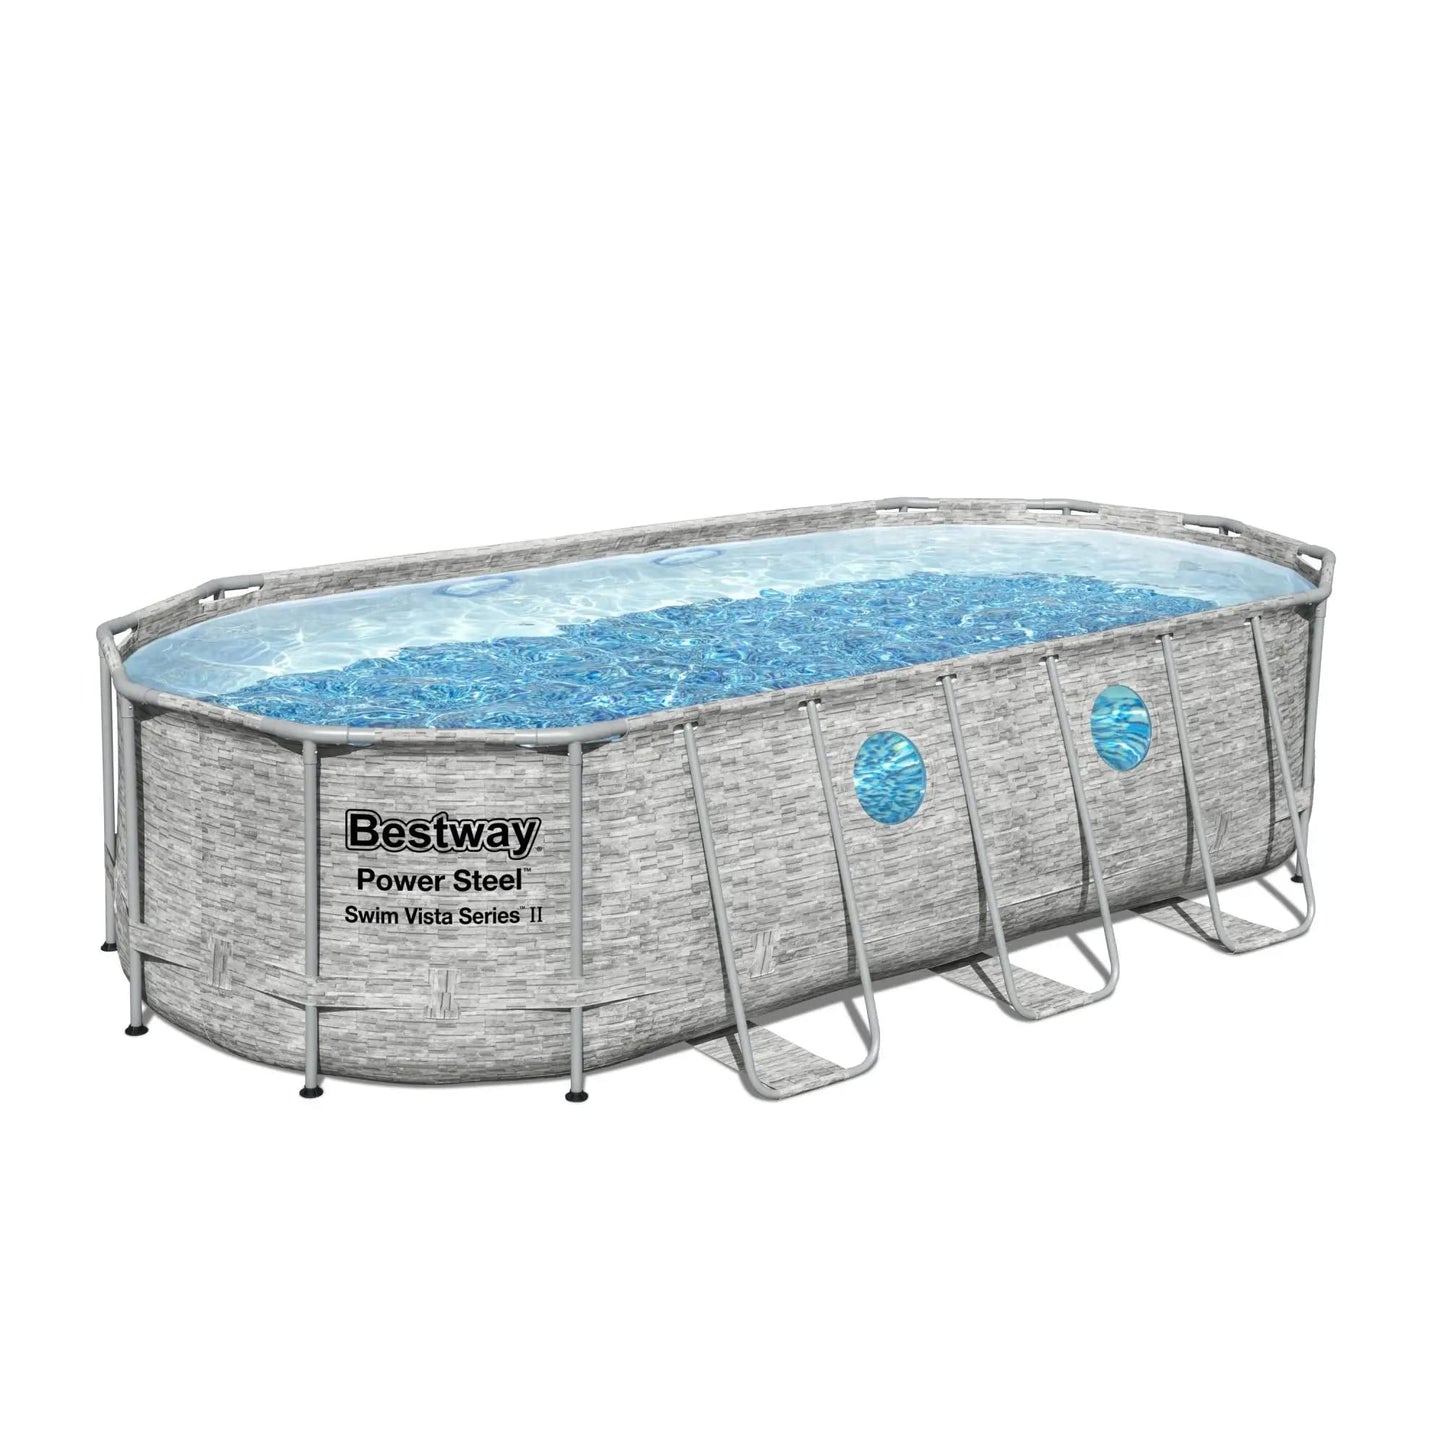 Bestway Power Steel Swim Vista Series II 18' x 9' x 48" Above Ground Outdoor Swimming Pool Set